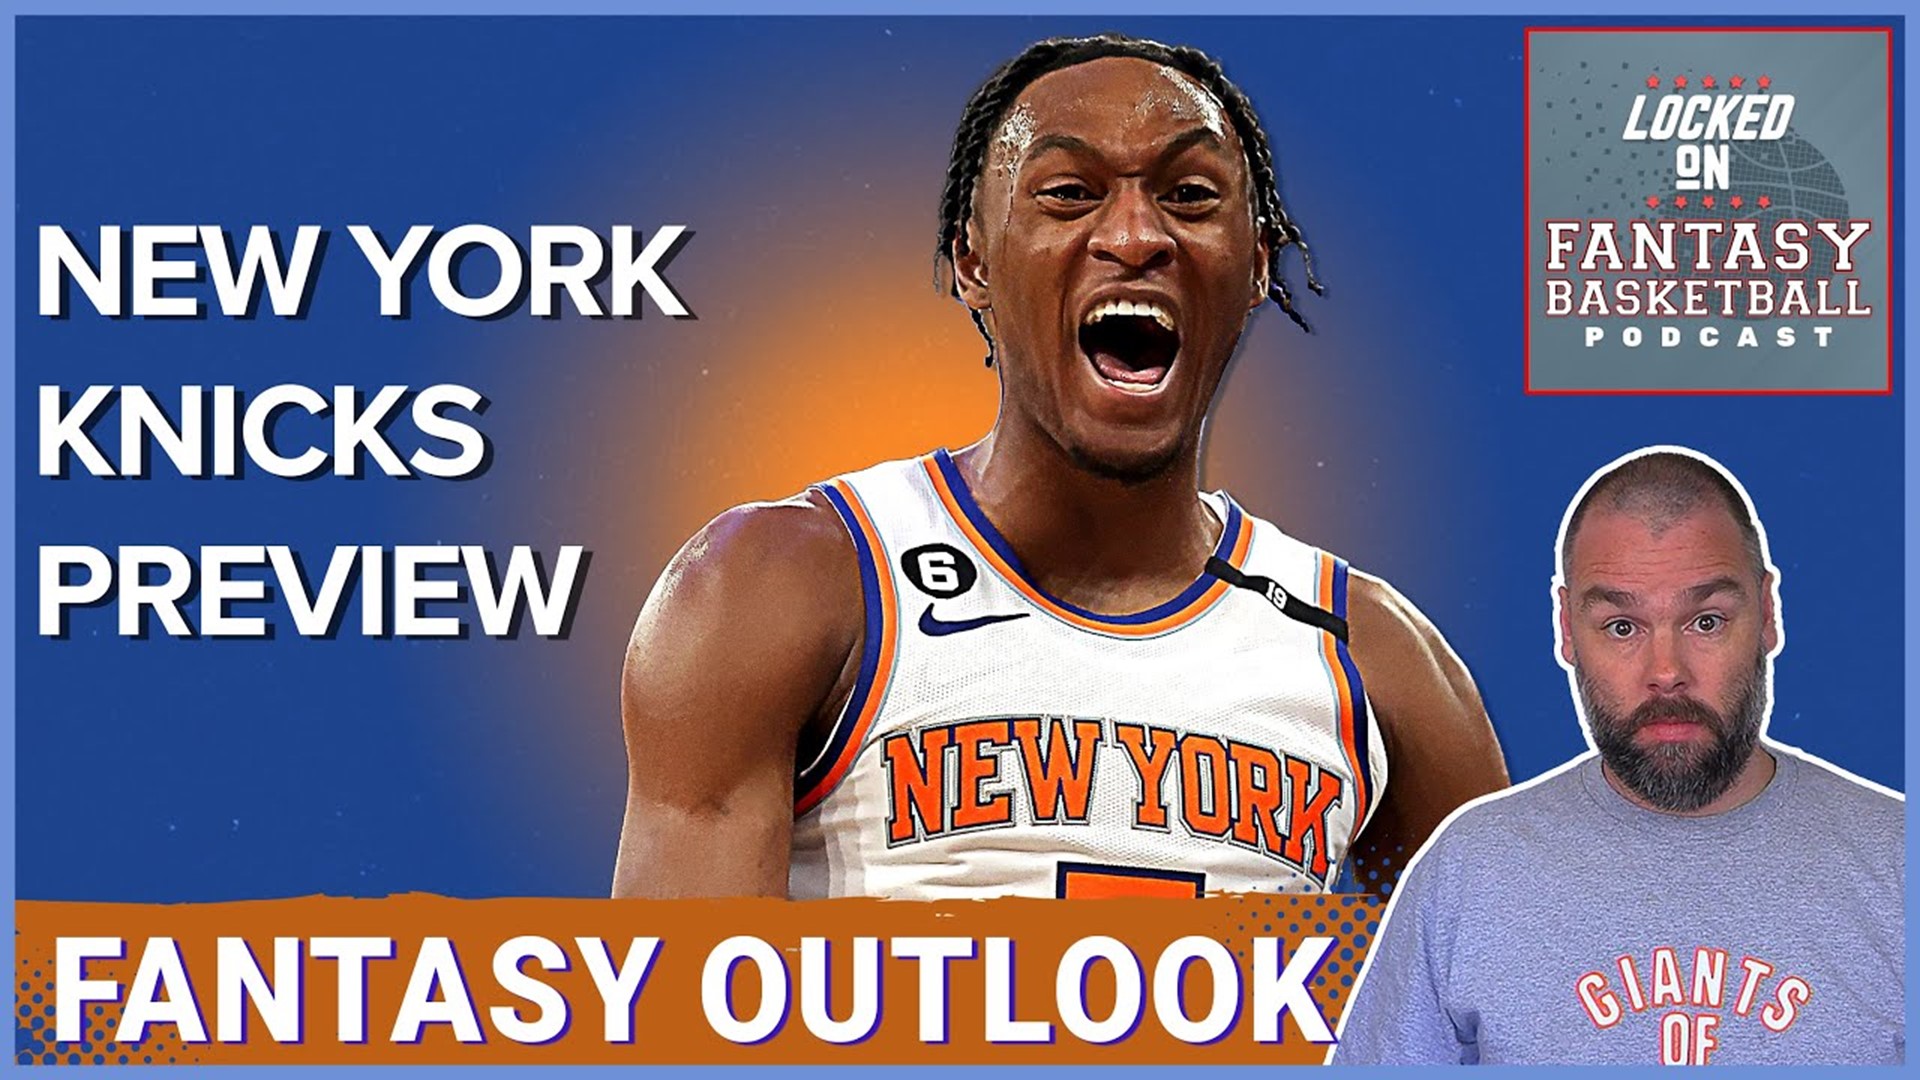 Josh Lloyd delves into the New York Knicks' 2023 season, breaking down critical insights for fantasy basketball.